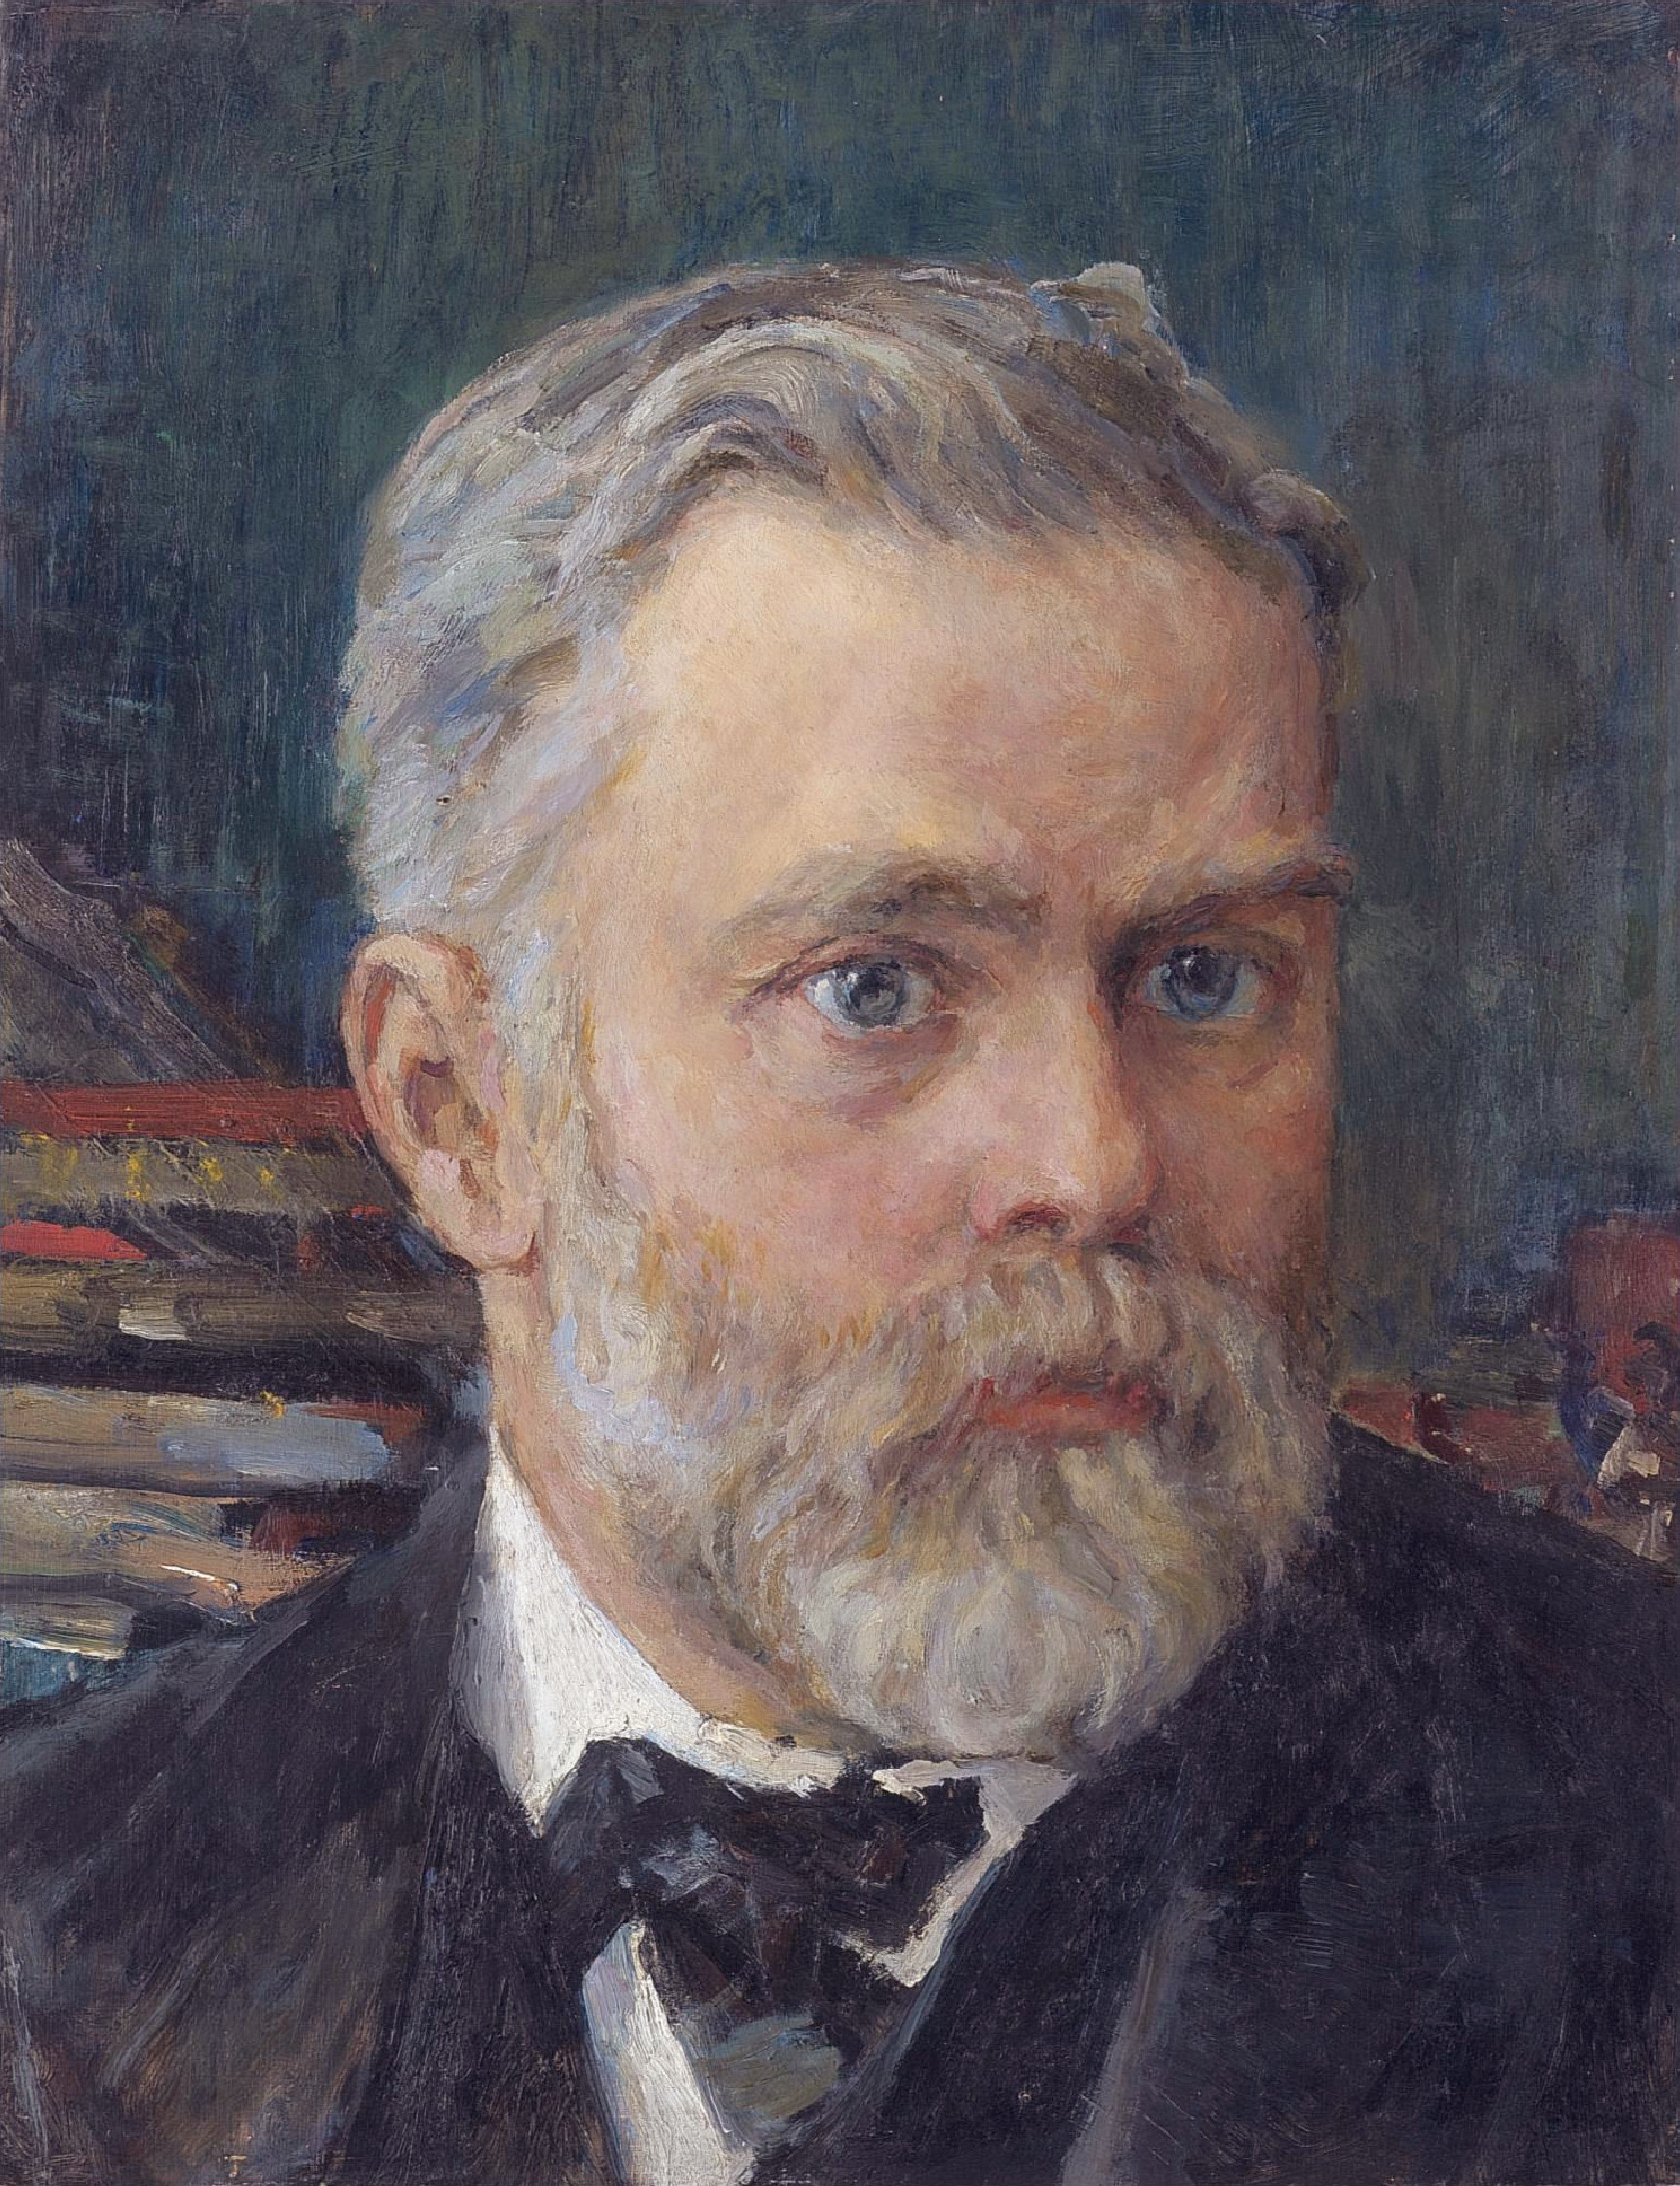 Emanuel Nobel, portrait by famous Russian artist Valentin Serov